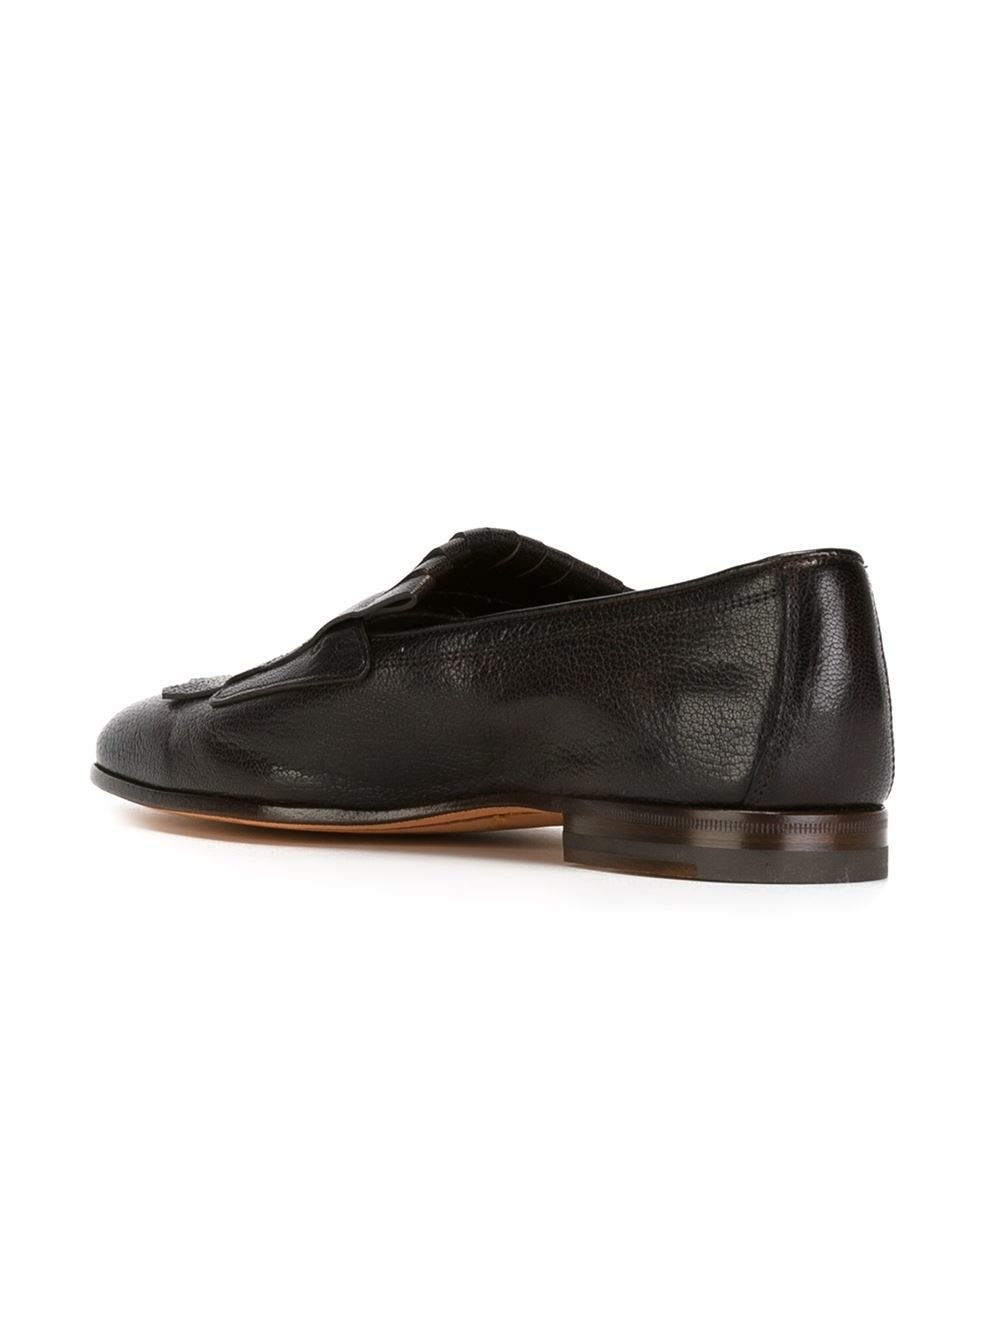 Lyst - Santoni Leather Loafers in Black for Men